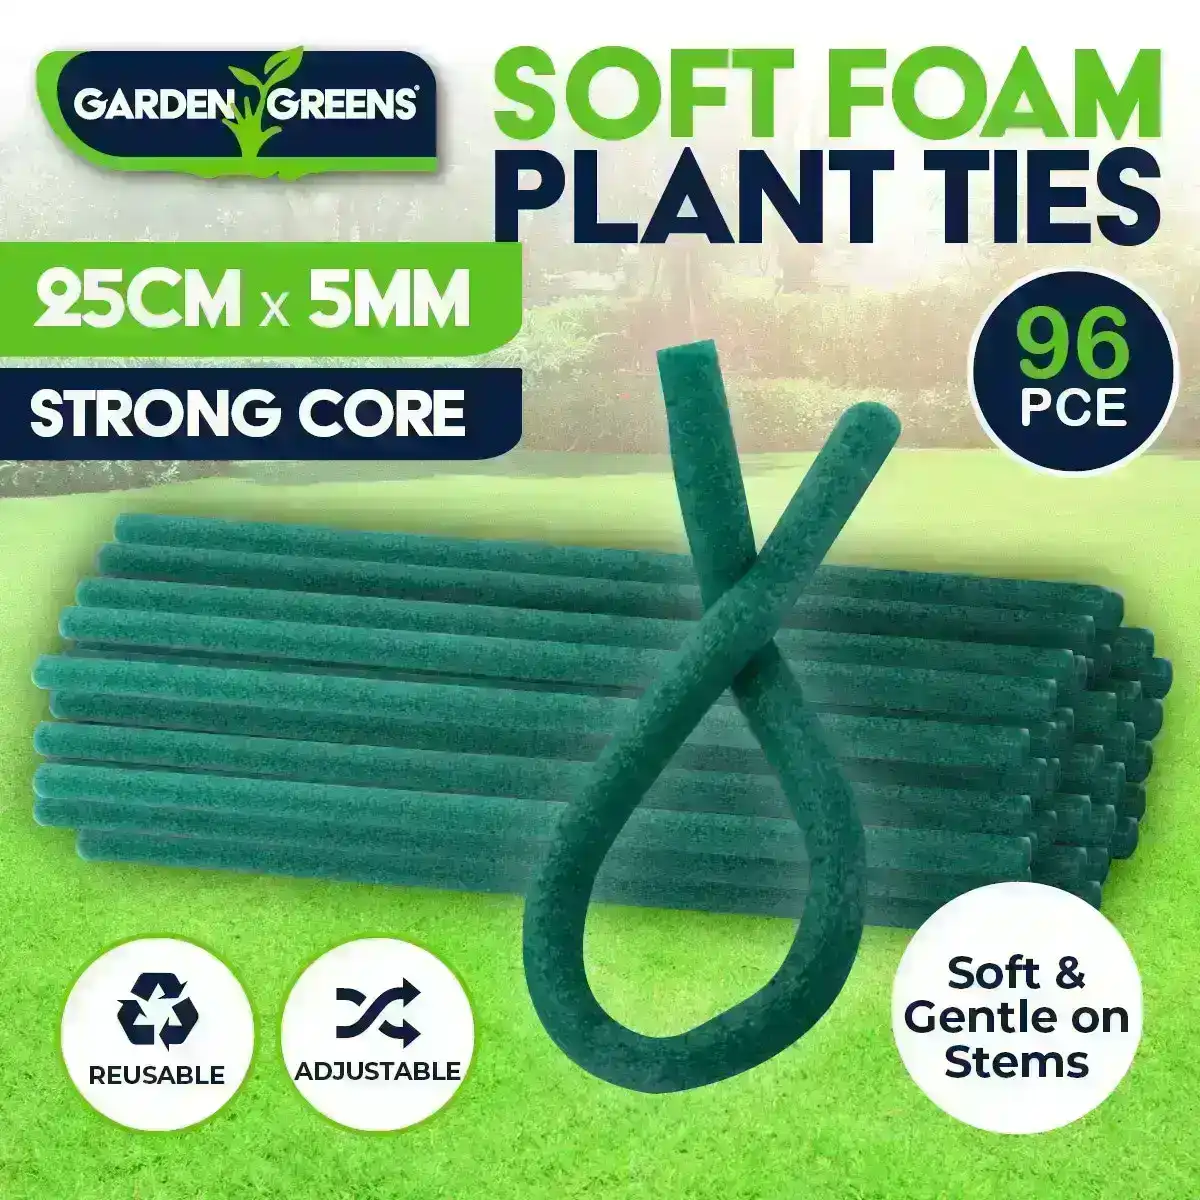 Garden Greens® 96PCE Plant Twist Ties Soft Foam Strong Adjustable Reusable 25cm